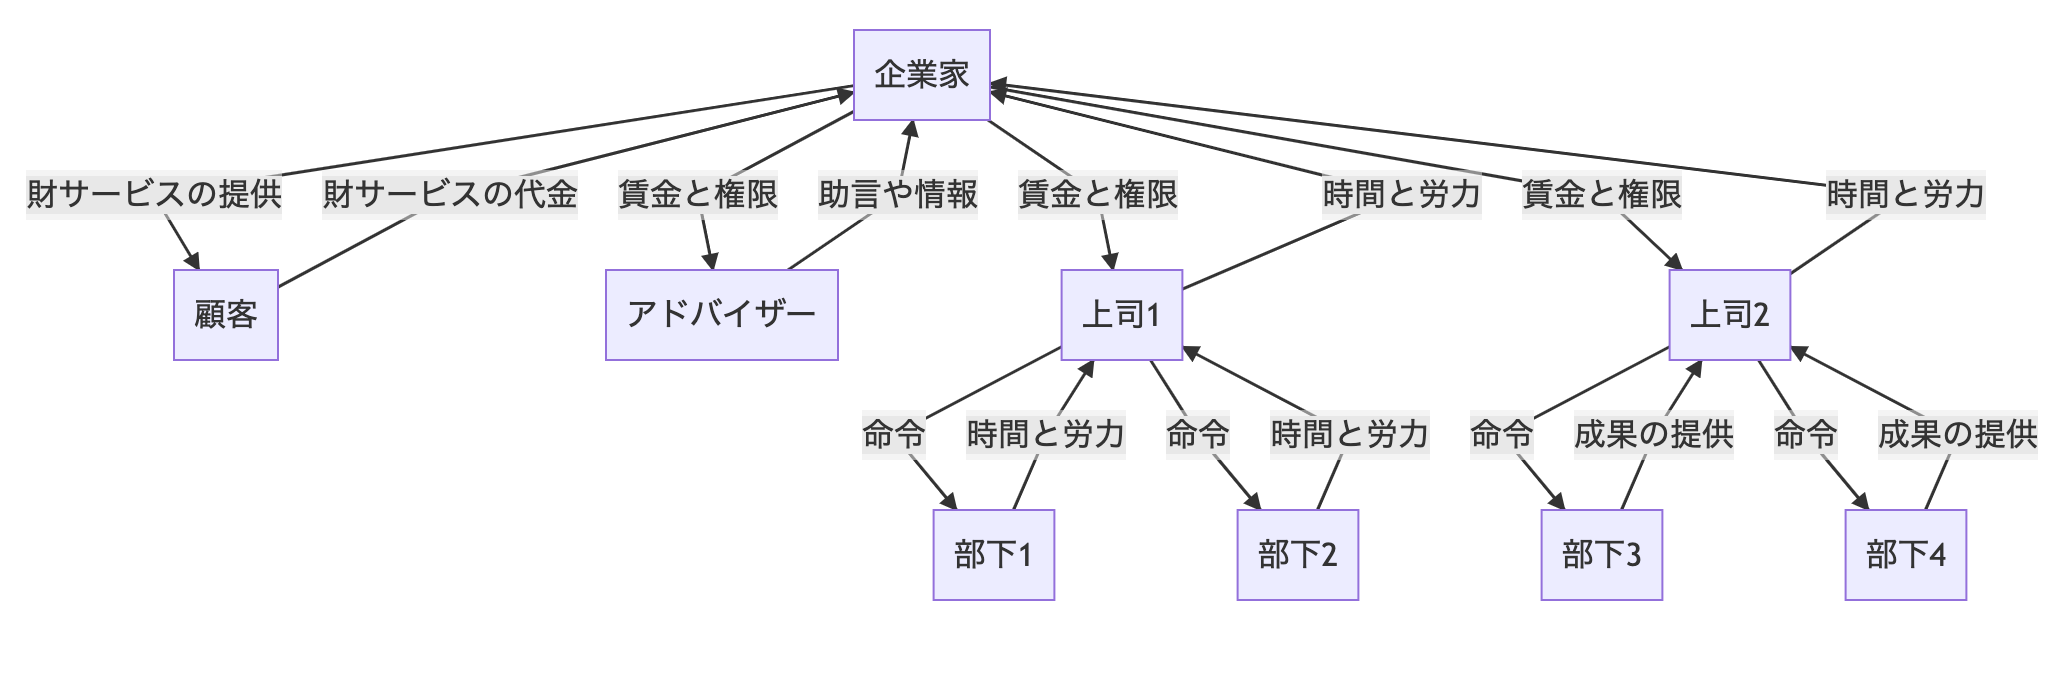 organization-image